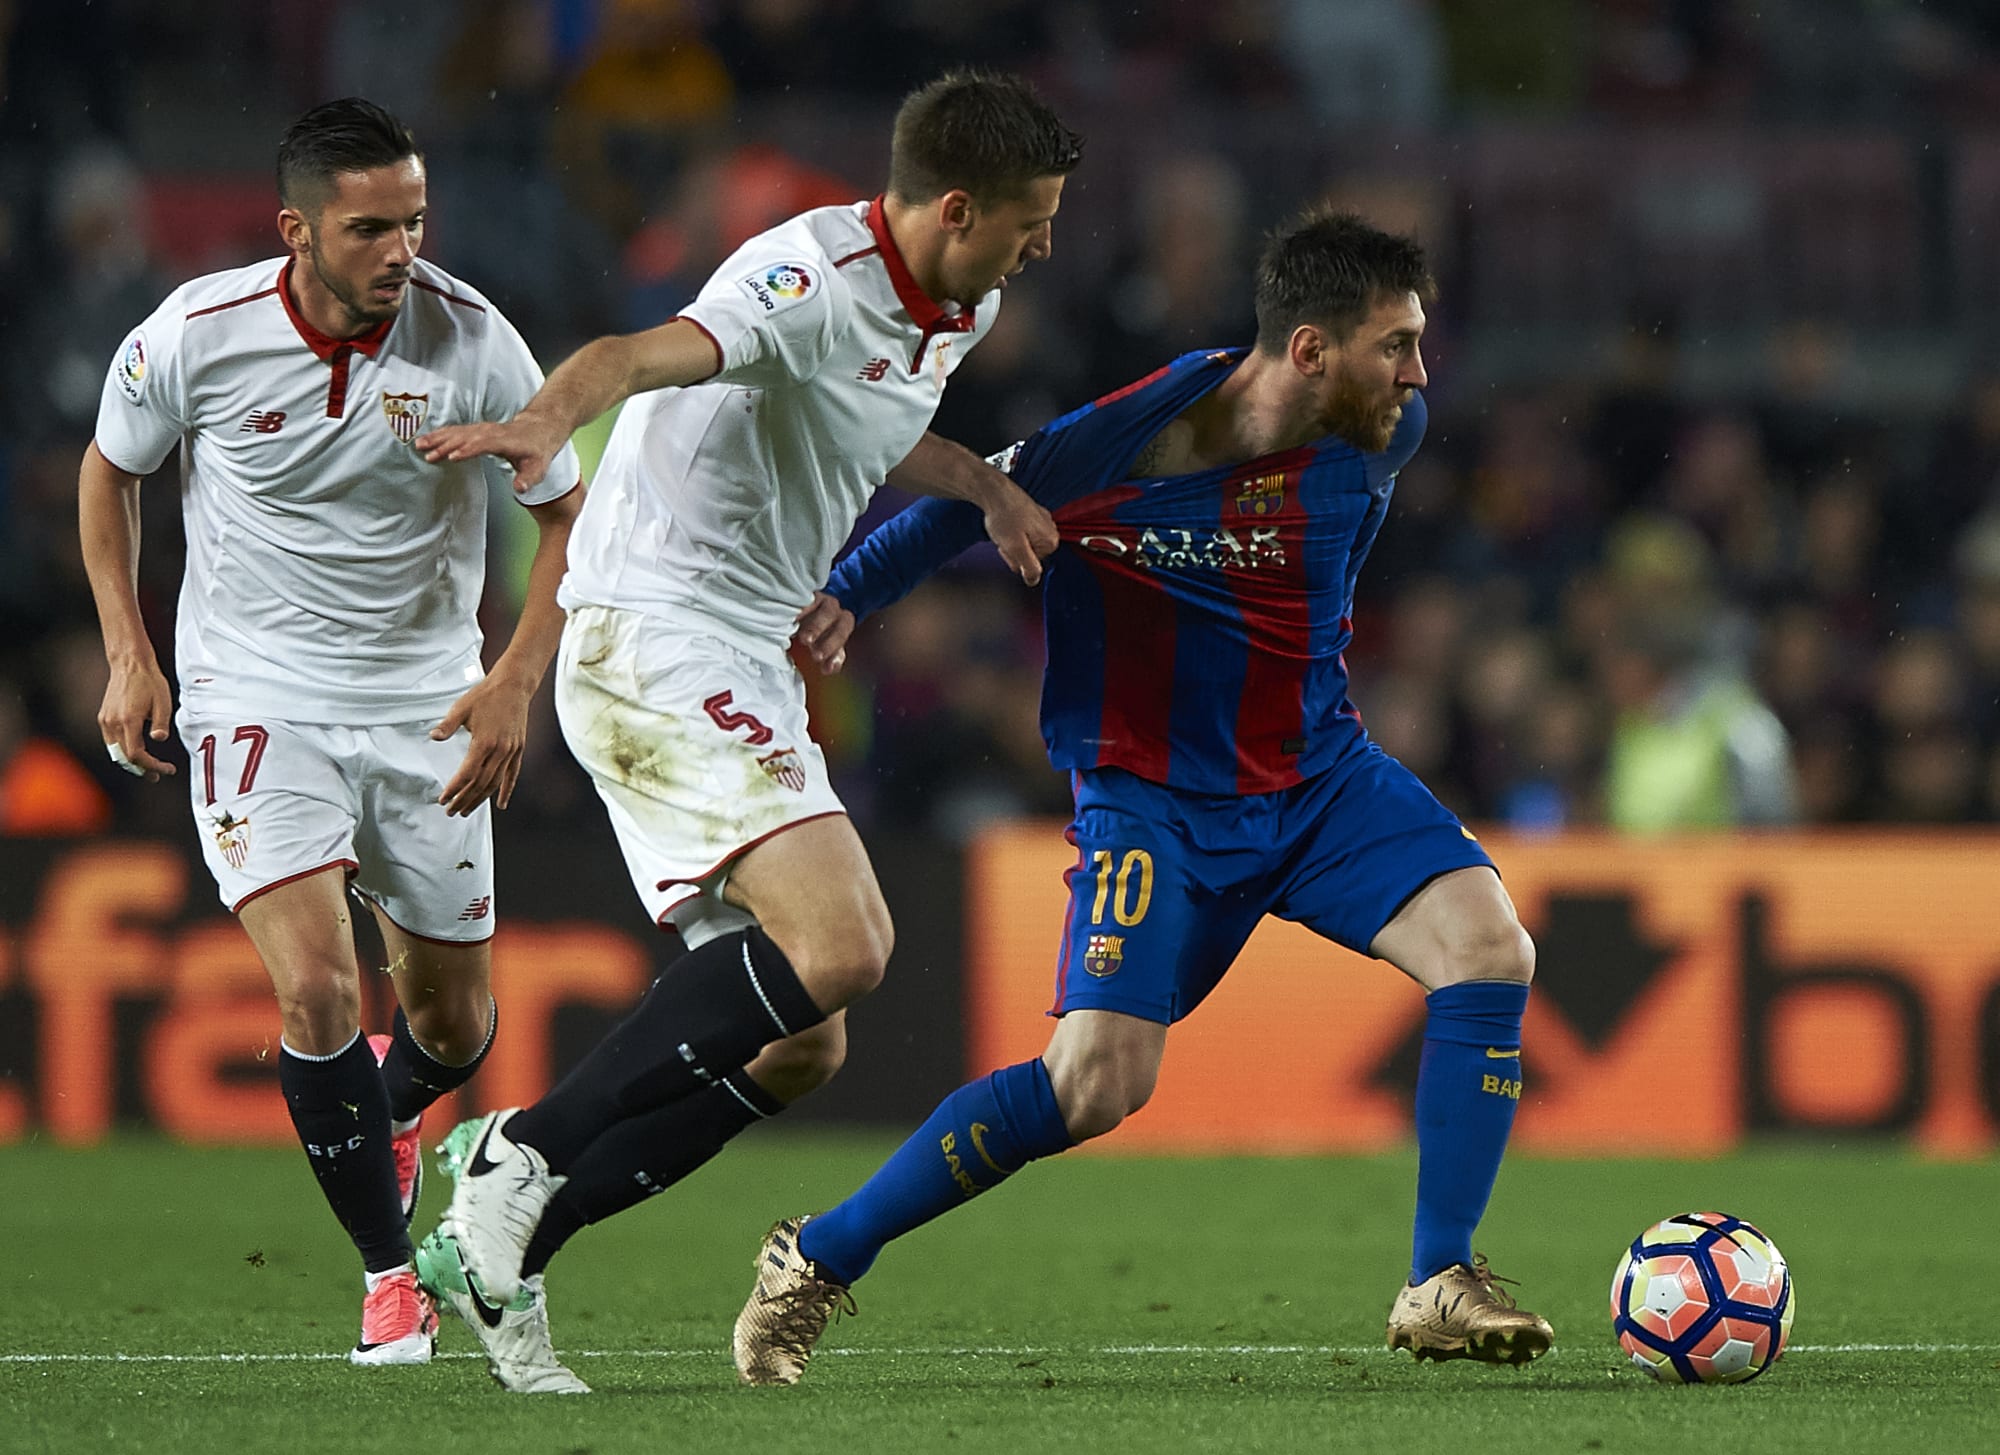 FC Barcelona 3-0 Sevilla: Player Ratings And Analysis